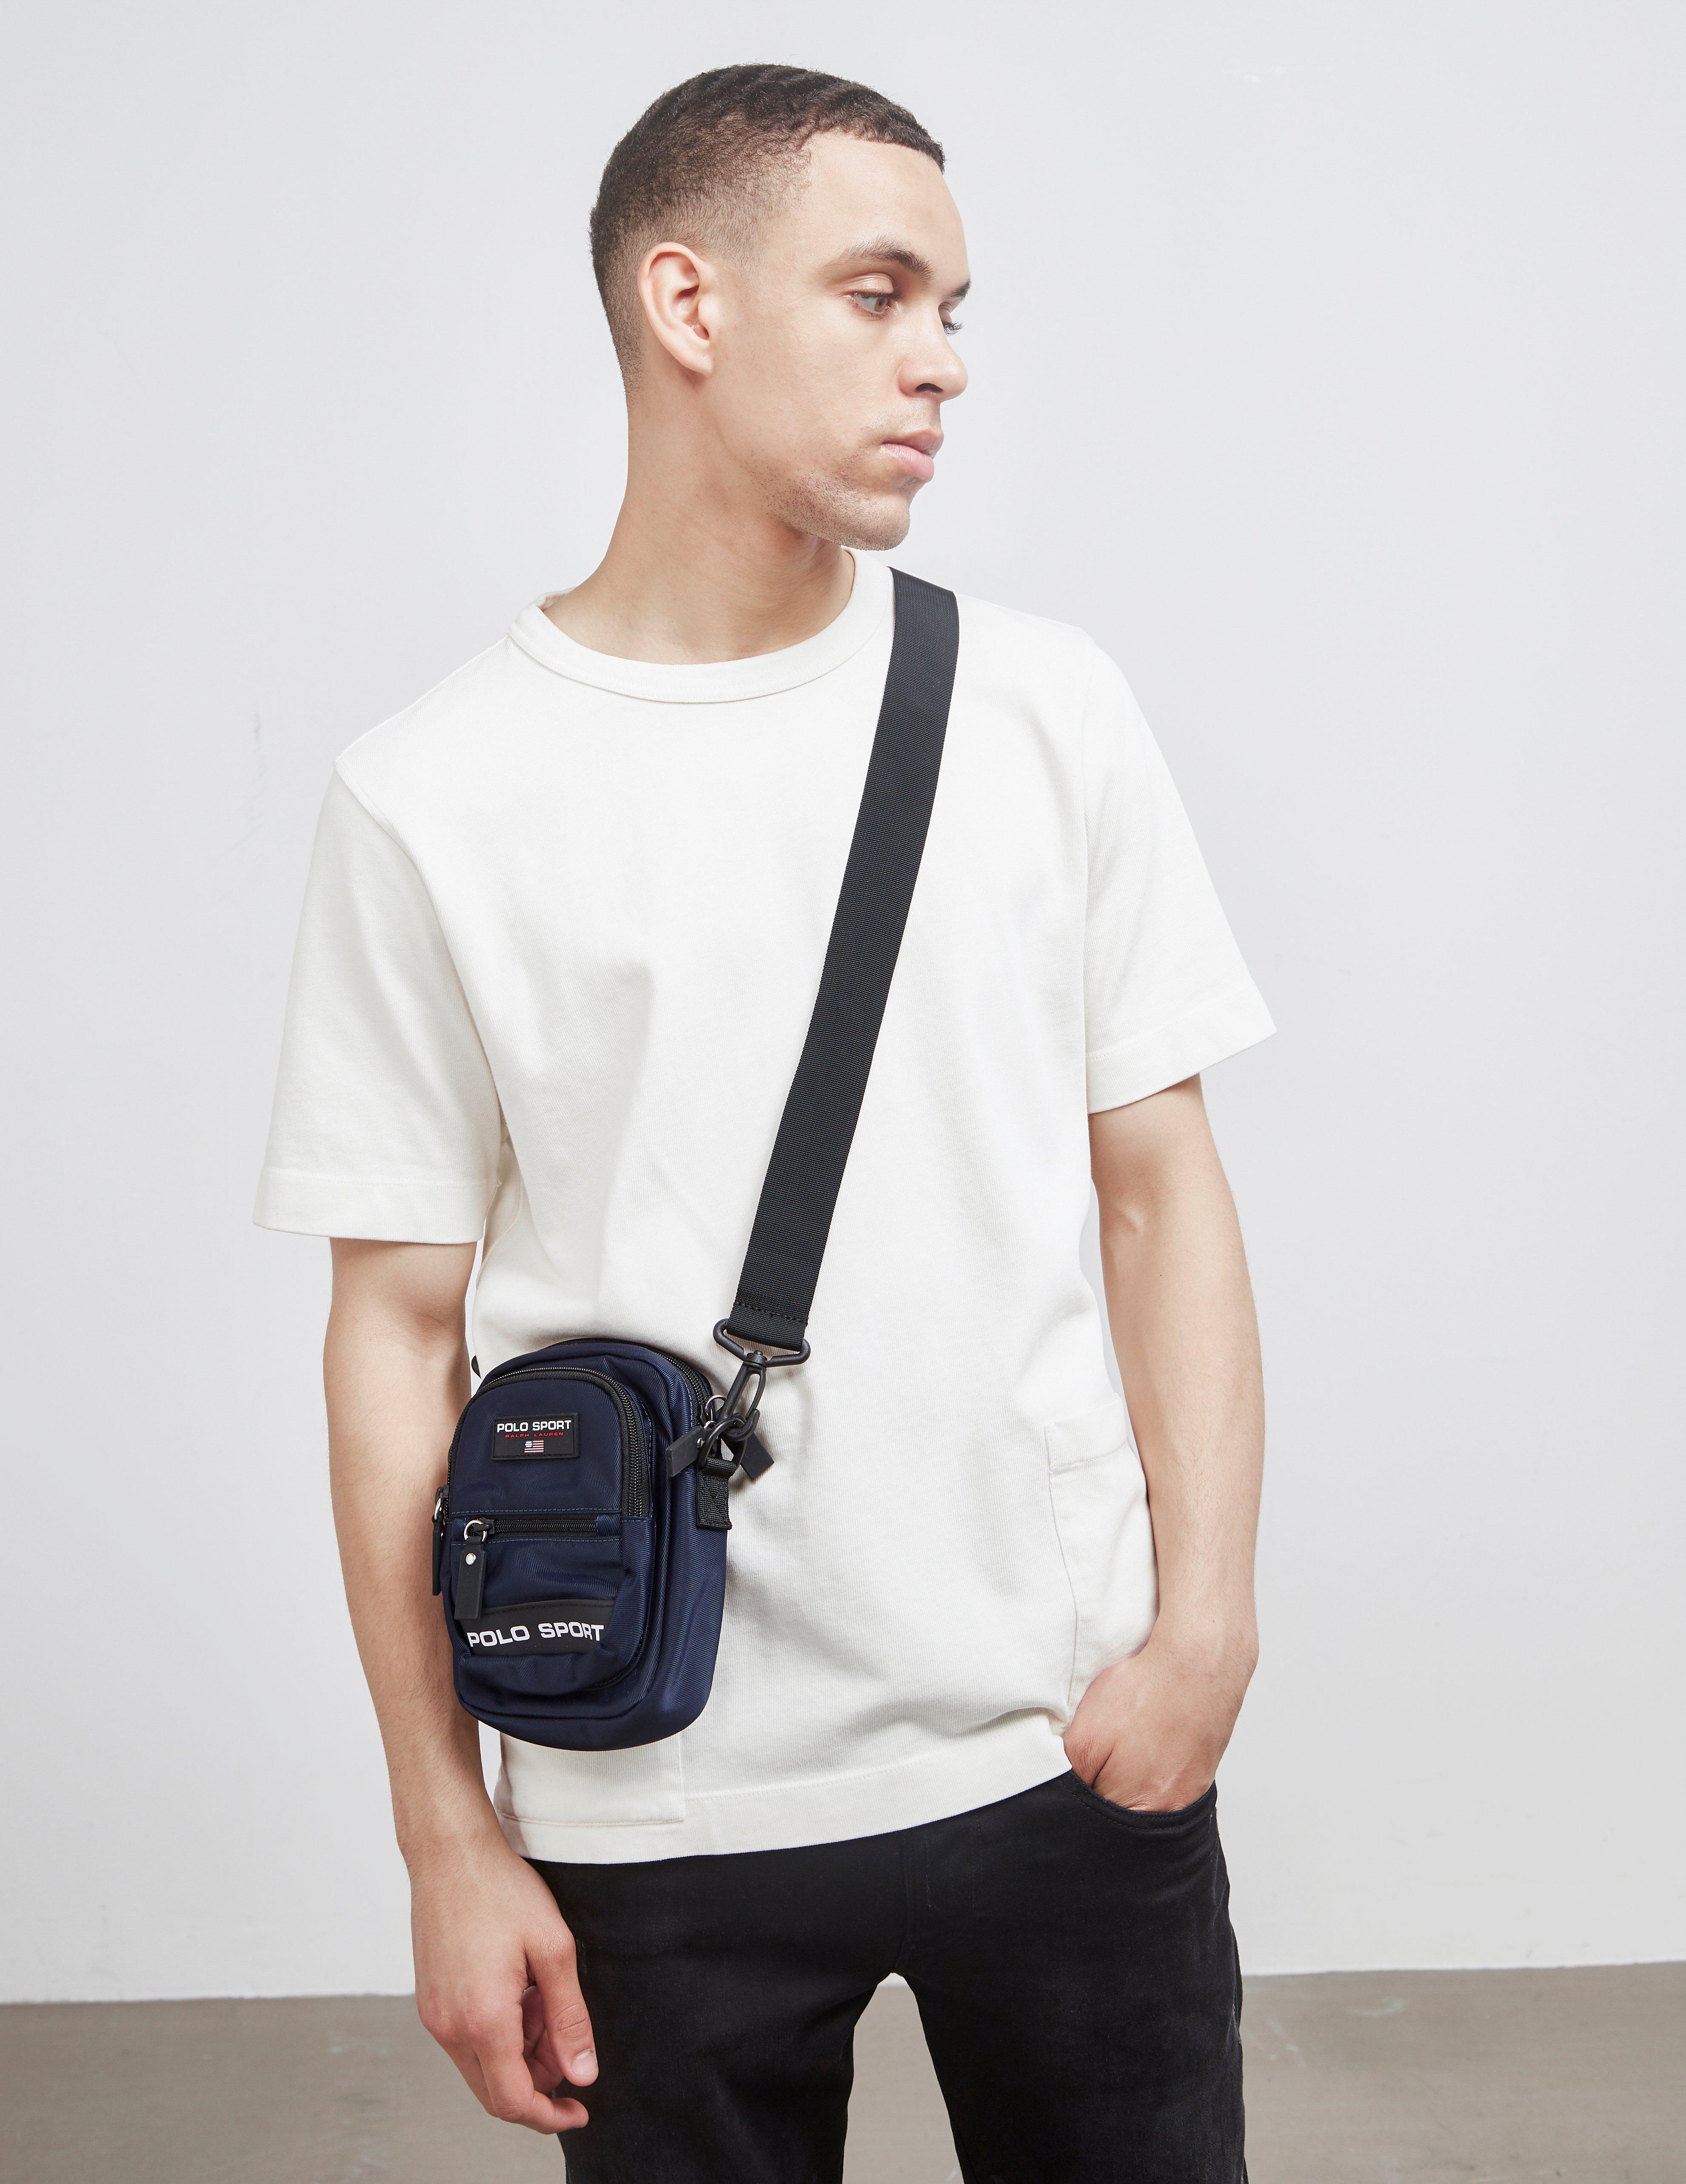 Polo Ralph Lauren Sport Small Item Bag Navy Blue for Men | Lyst